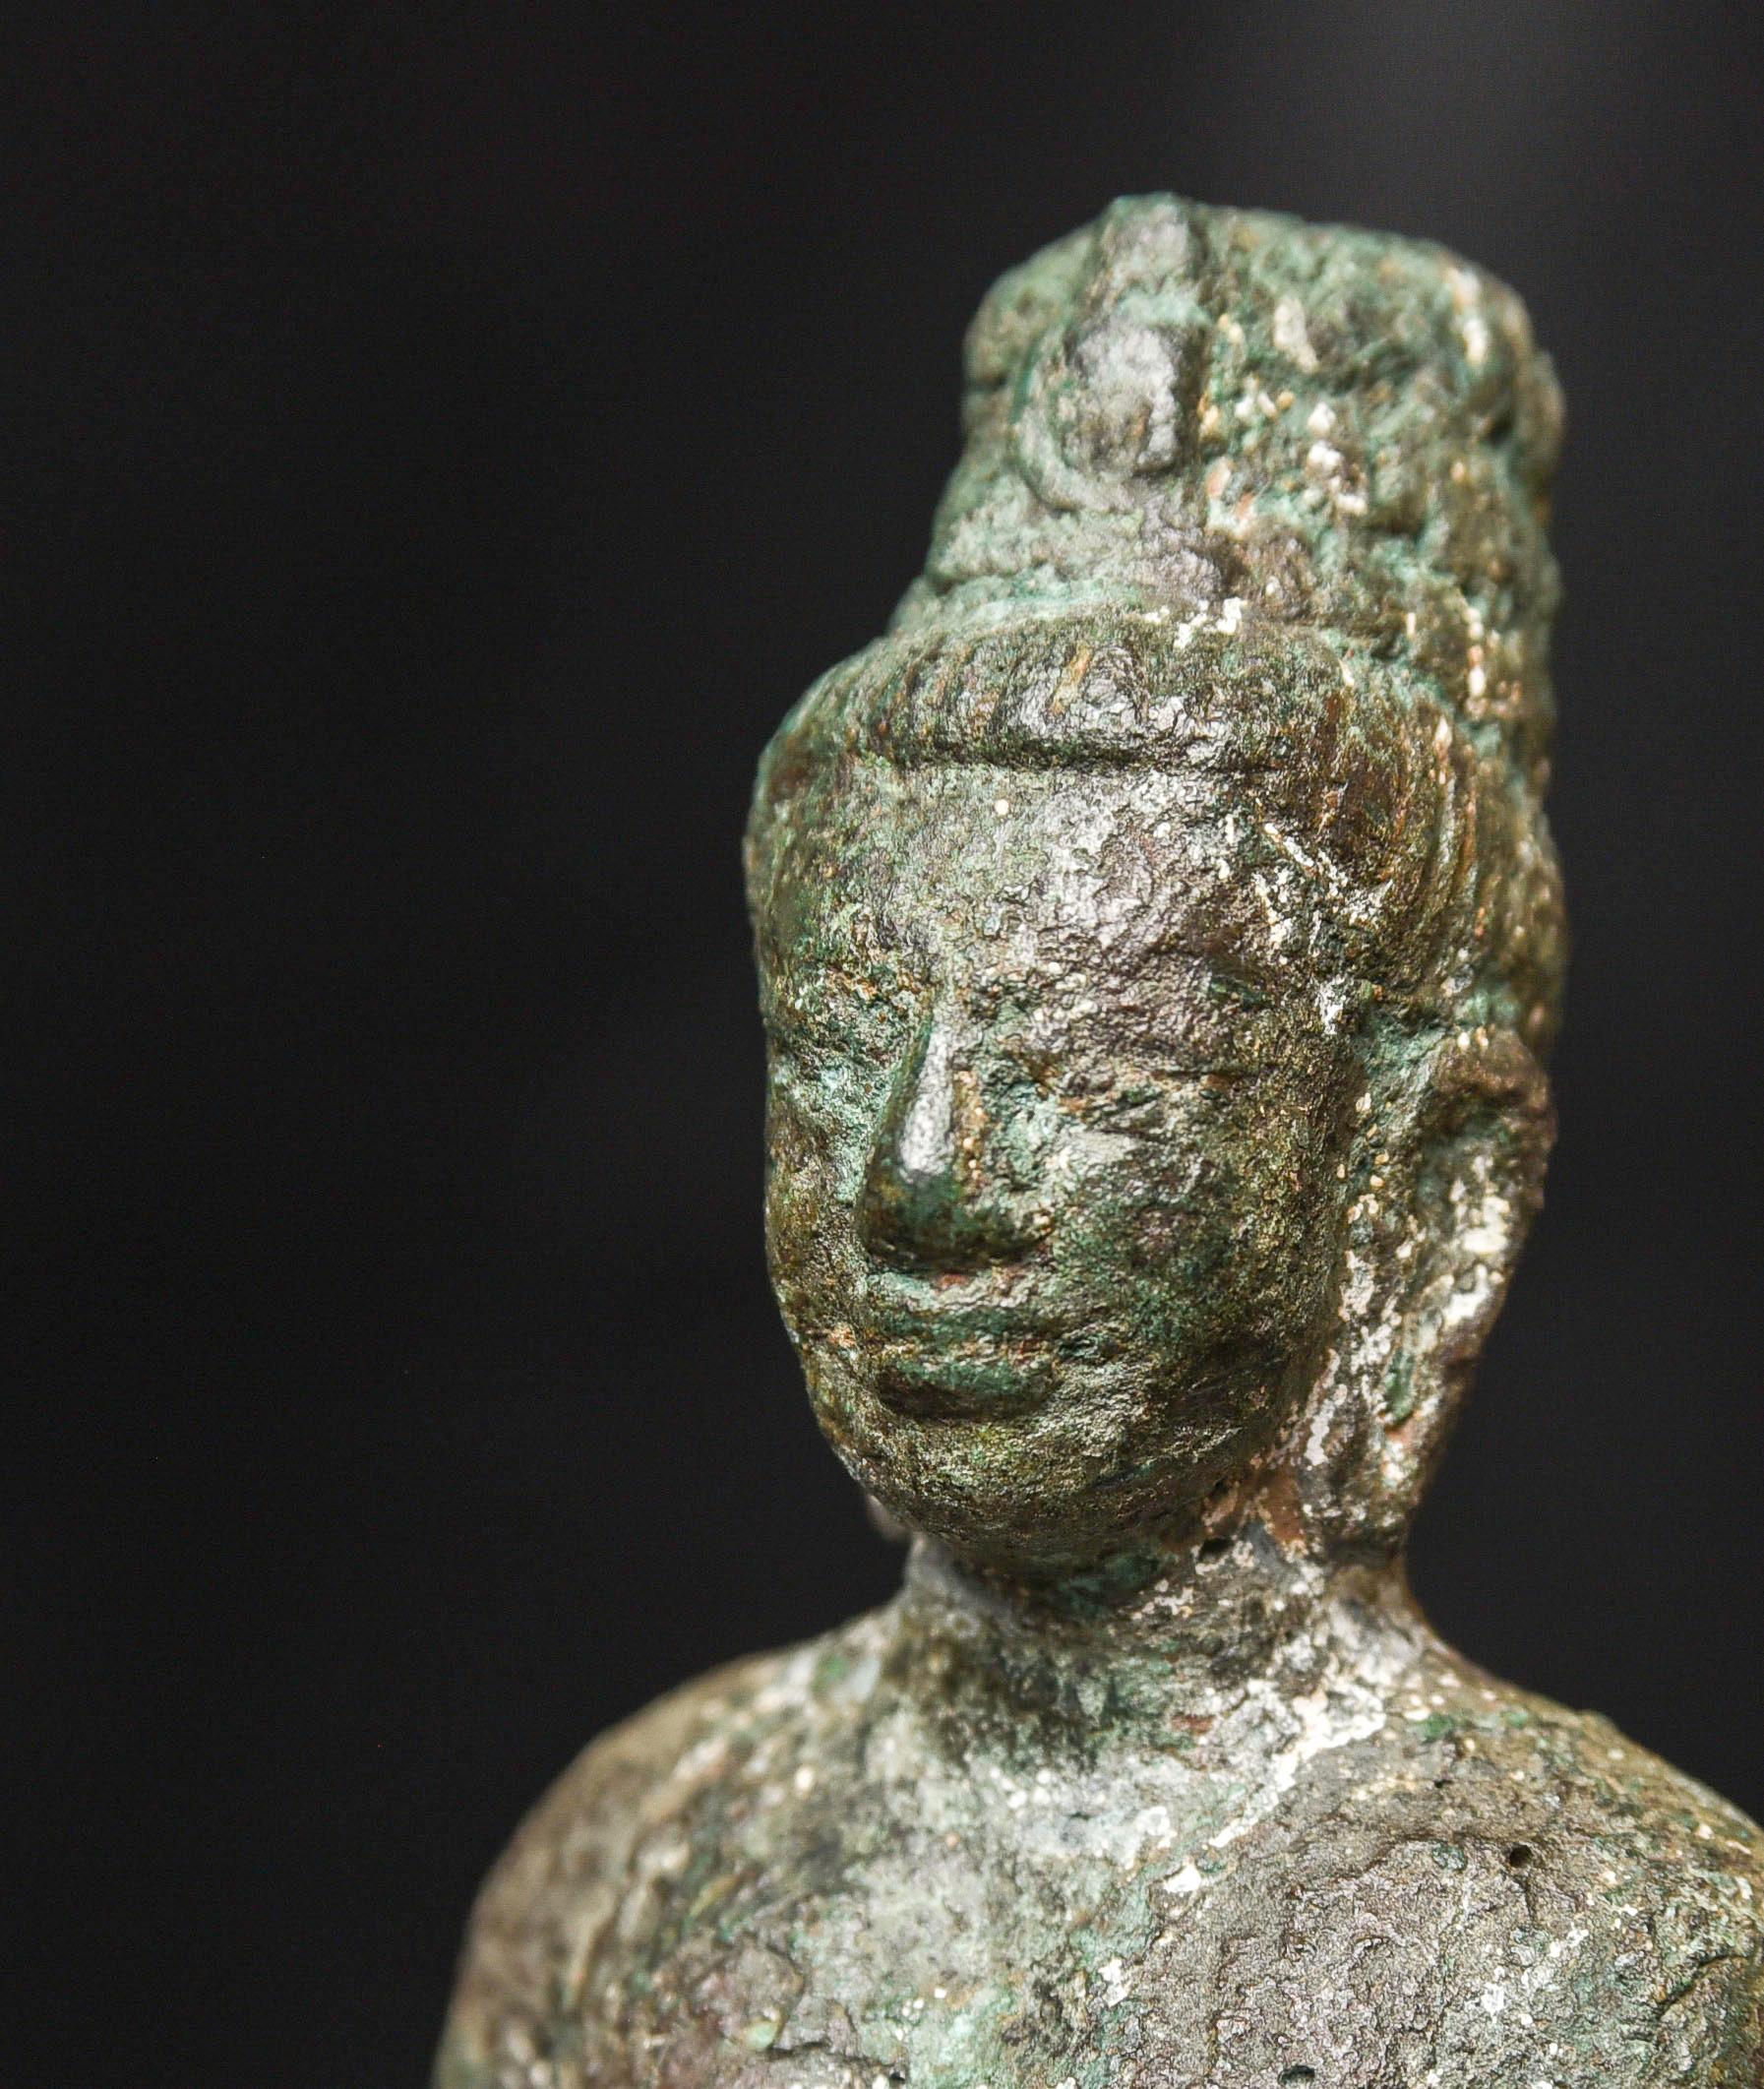 7th/9thC Solid-Cast Bronze Prakhon Chai Buddha or Bodhisattva - 9688 For Sale 12